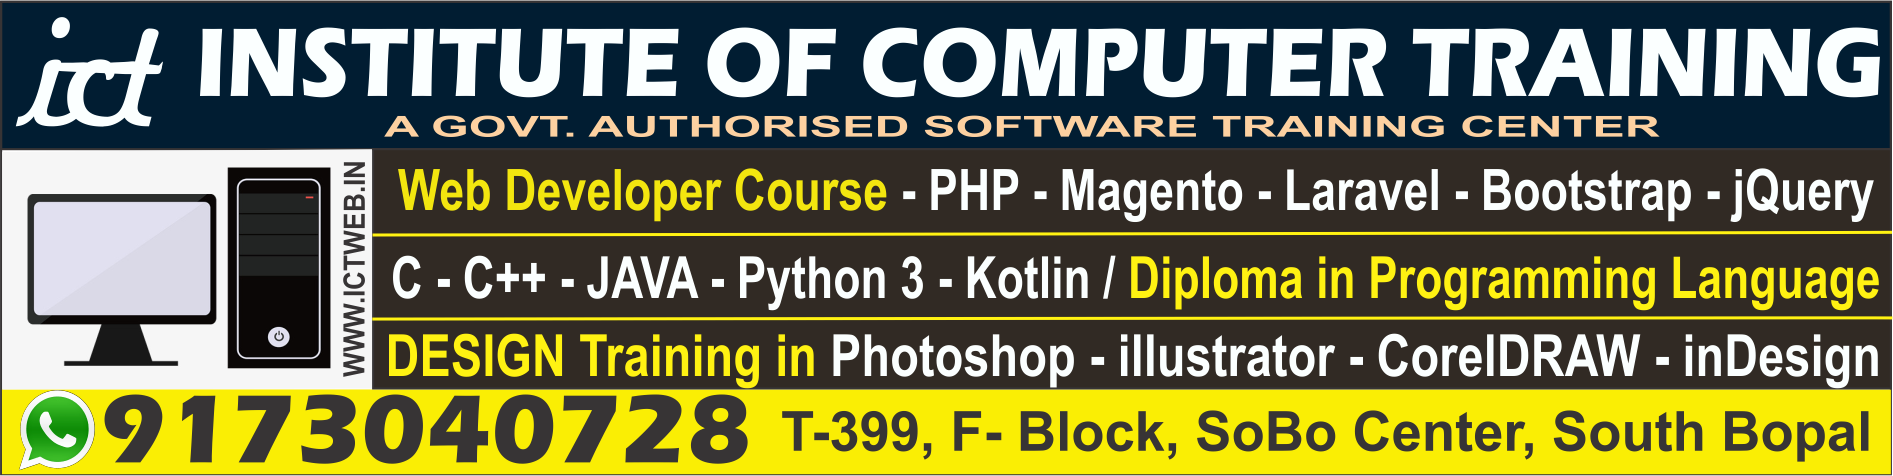 Institute of Computer Training|Colleges|Education